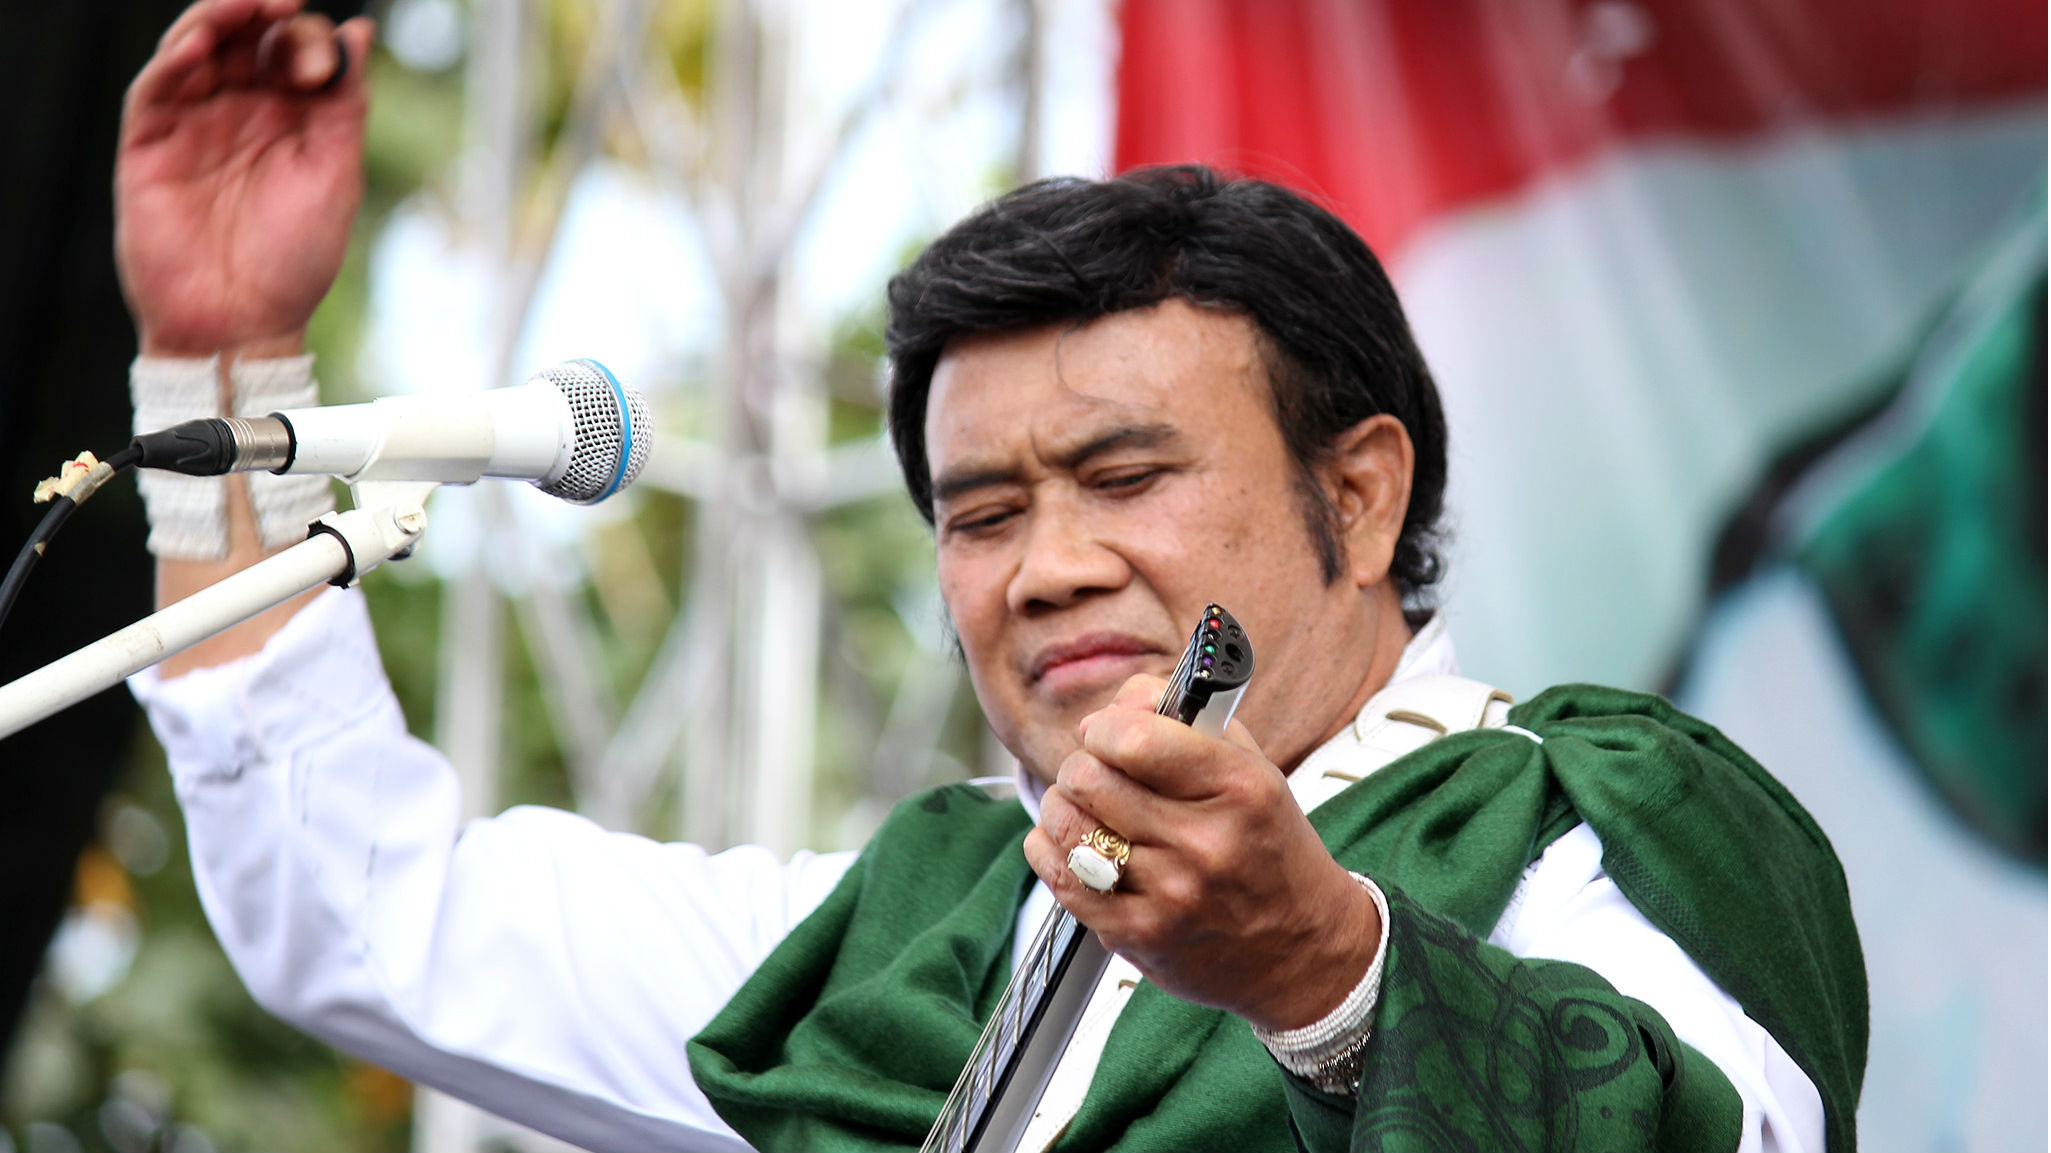 Partai Idaman Inhil Targetkan Satu Fraksi Pada Pileg 2019